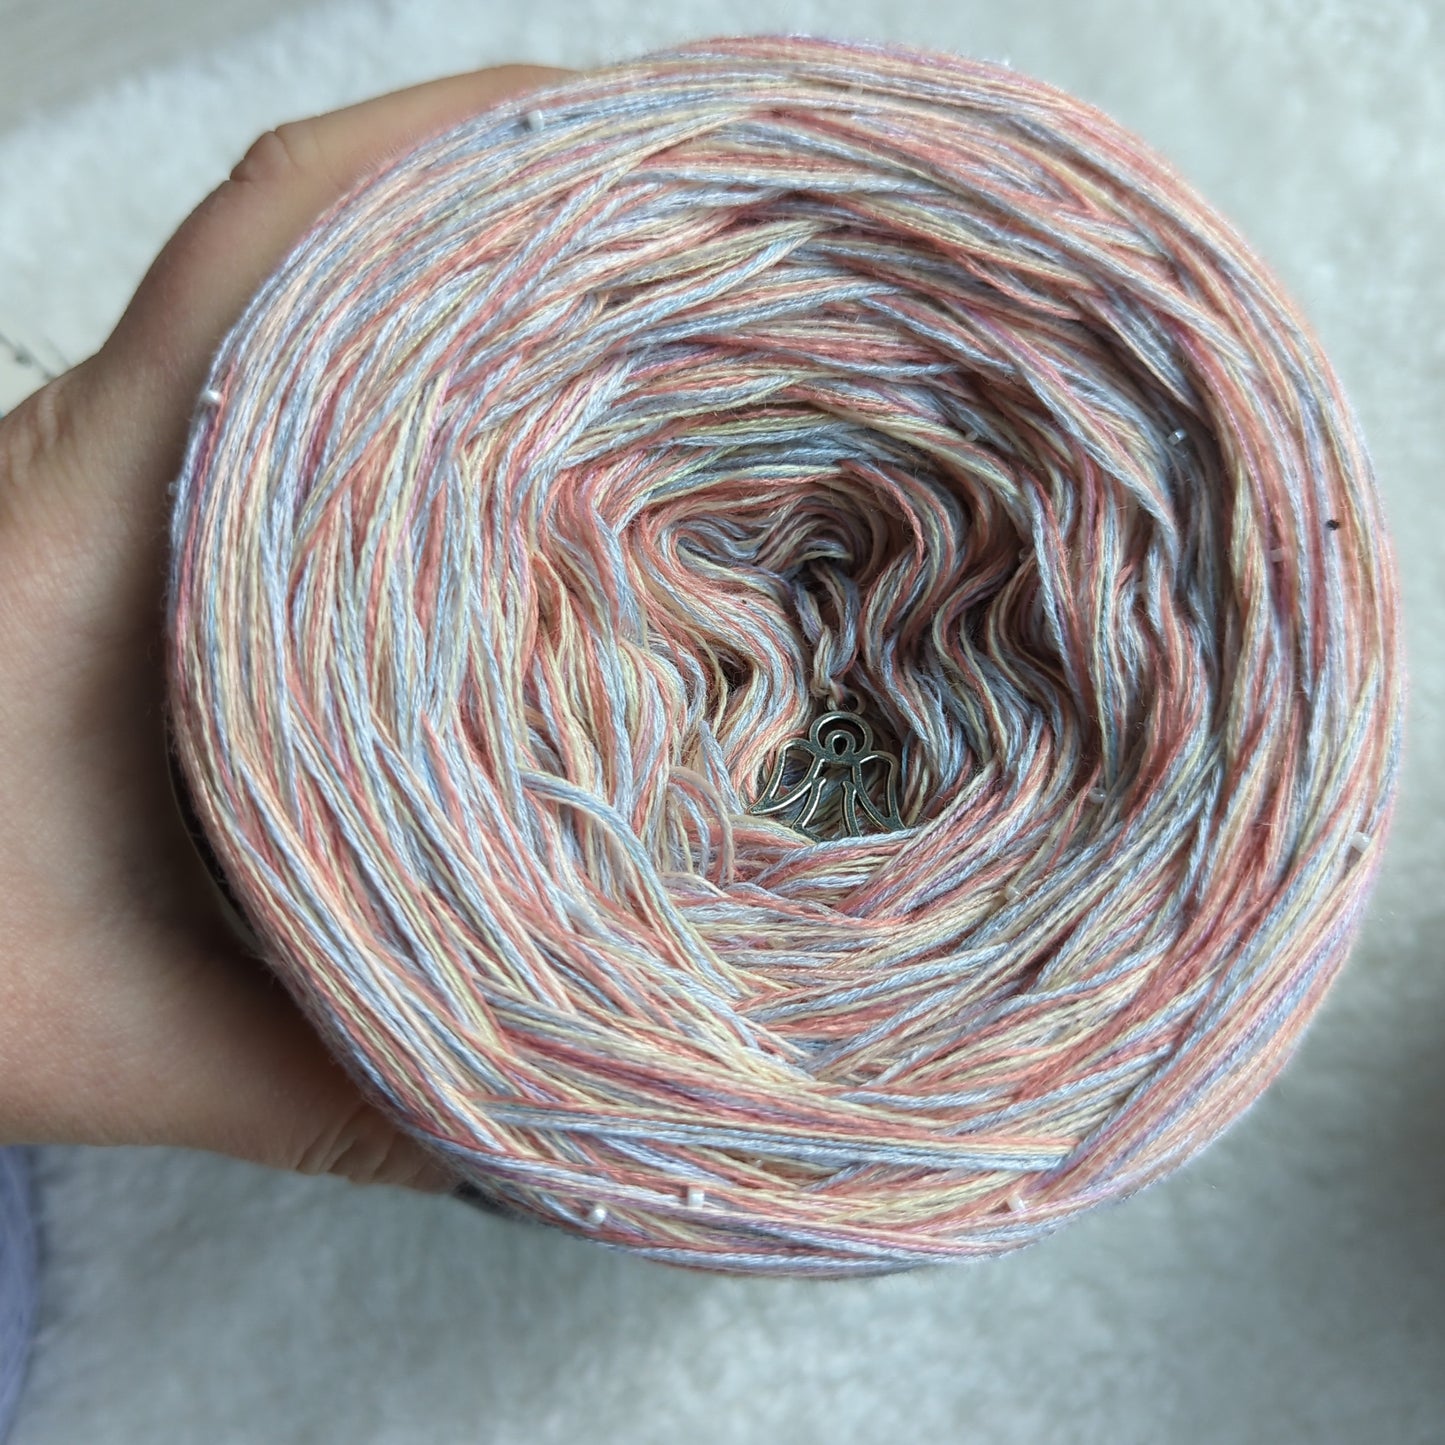 M052 merino/acrylic melange yarn cake, 260g, about 700m, 3ply plus two additional threads